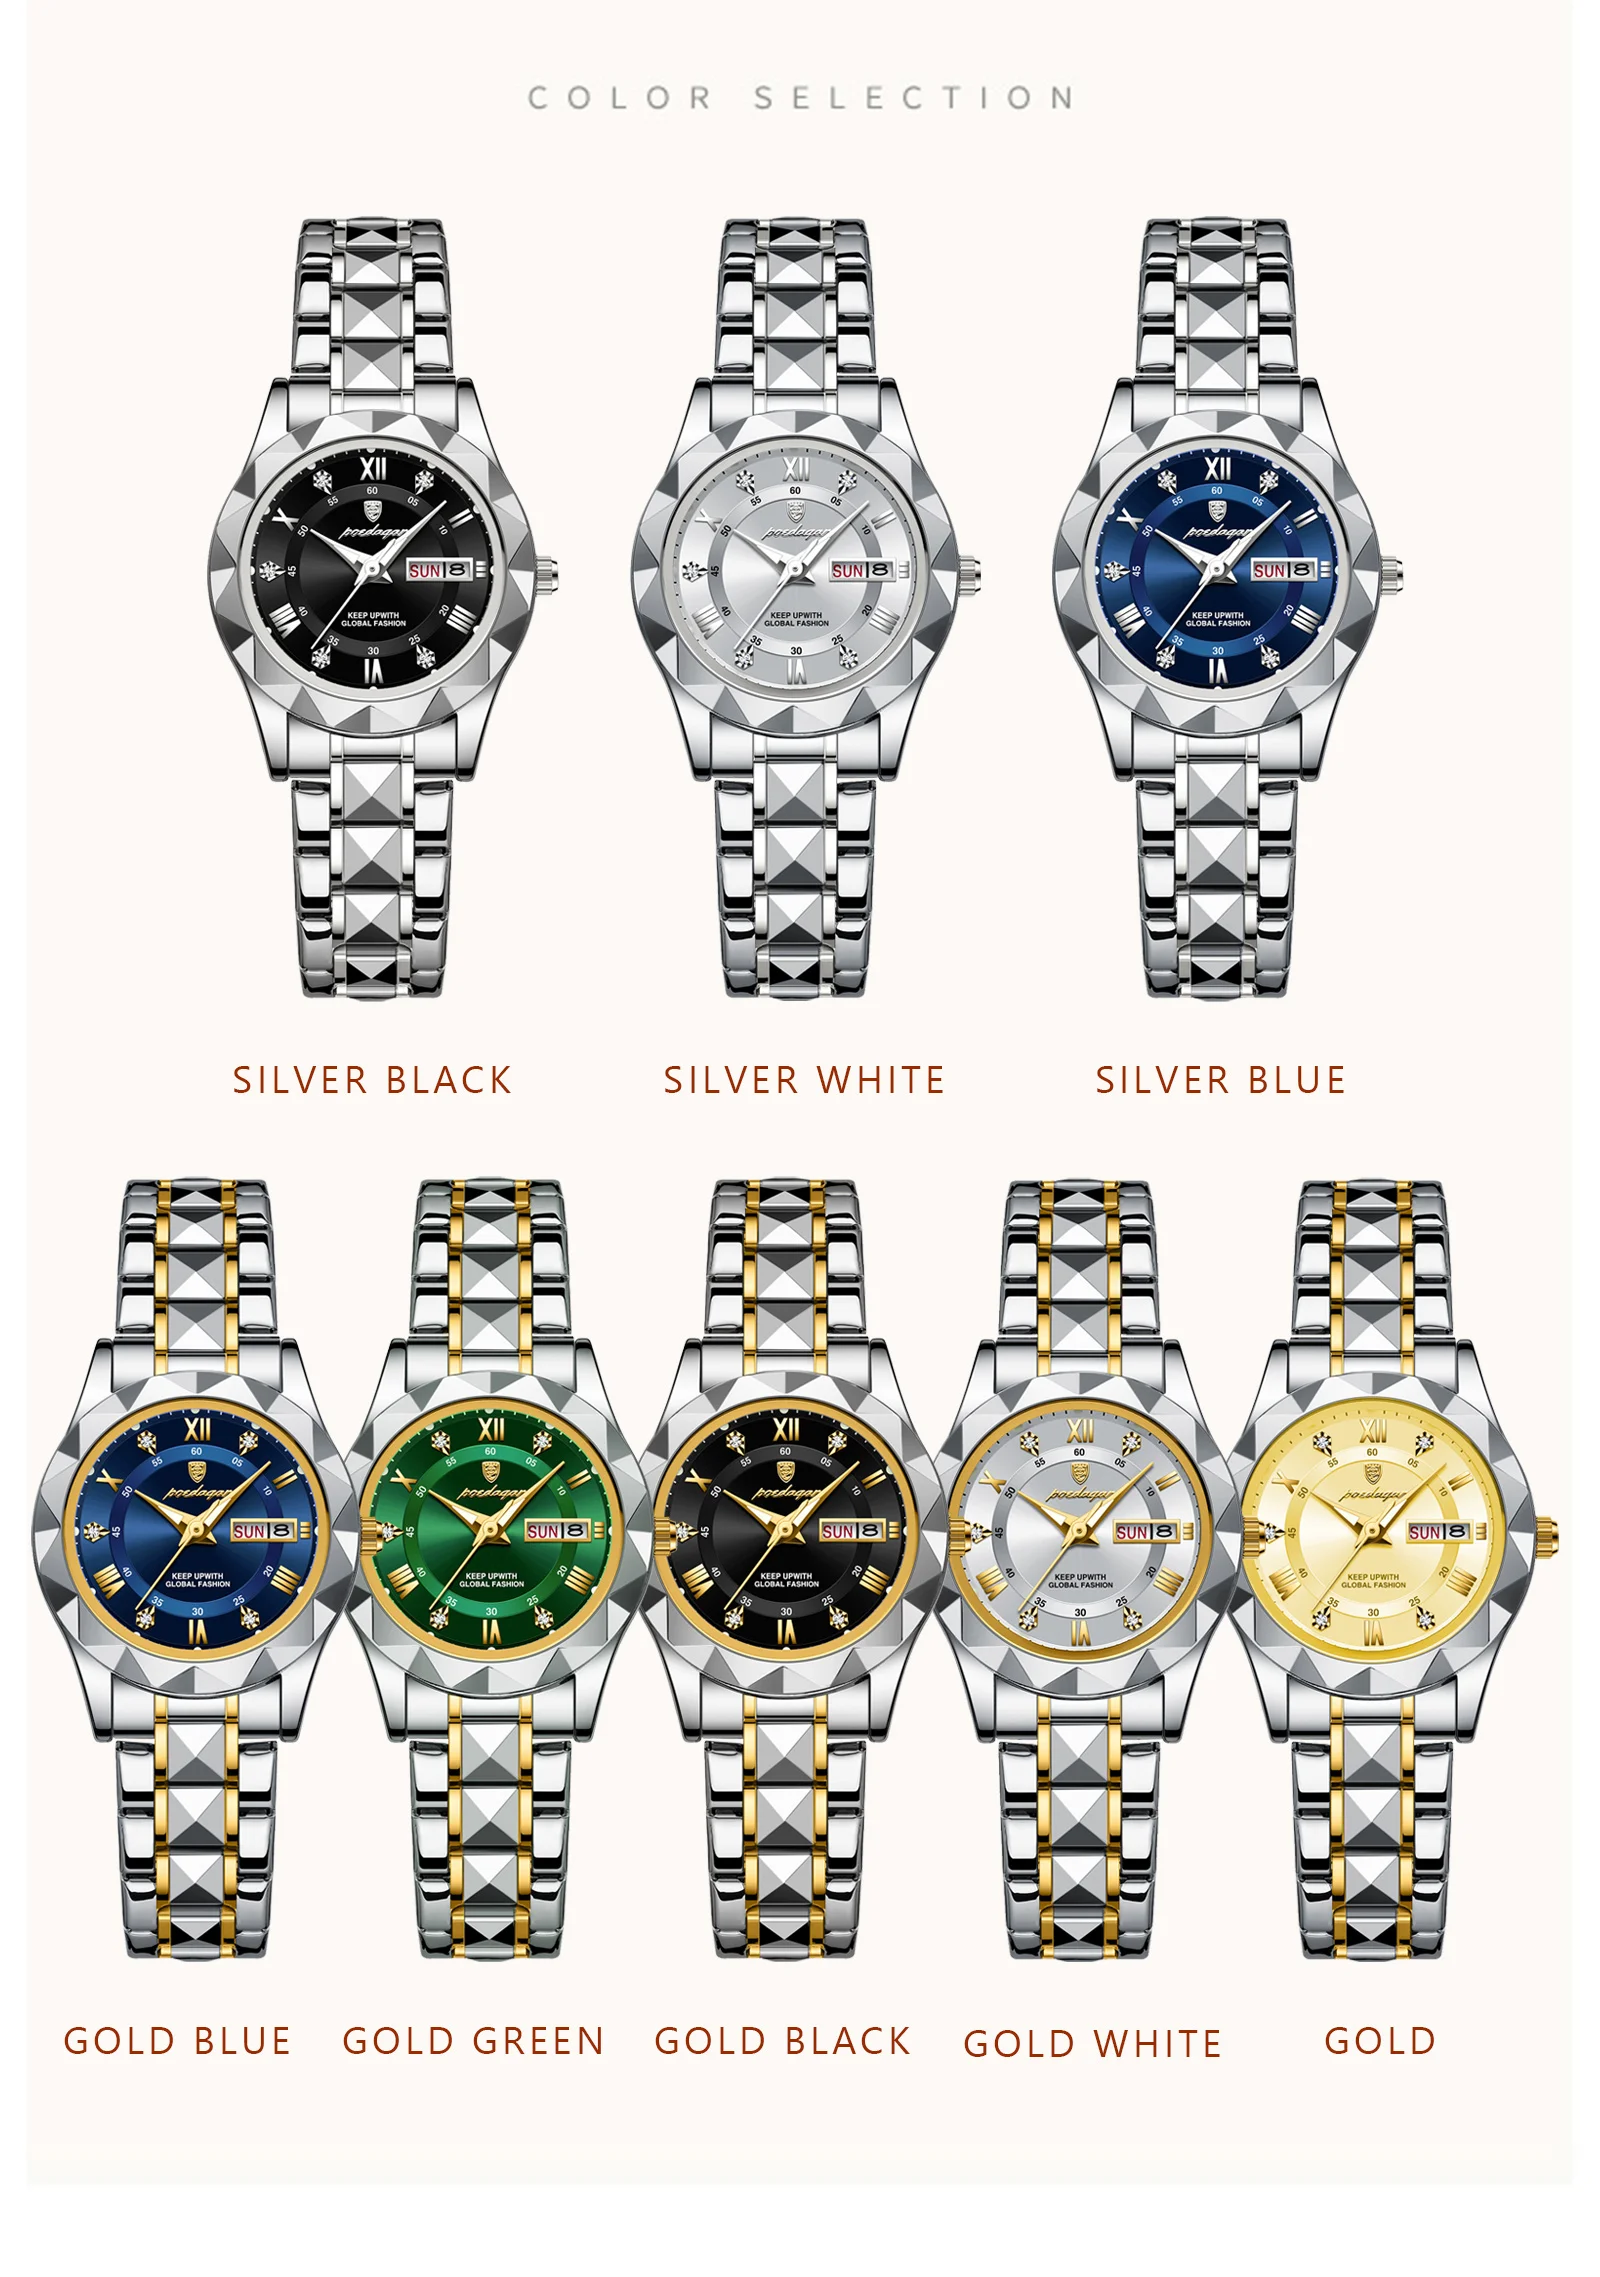 Poedagar נשים יוקרה להתלבש לצפות בשבוע עמיד למים תאריך אישה wristwatch נירוסטה נשים קוורץ שעונים reloj + תיבה